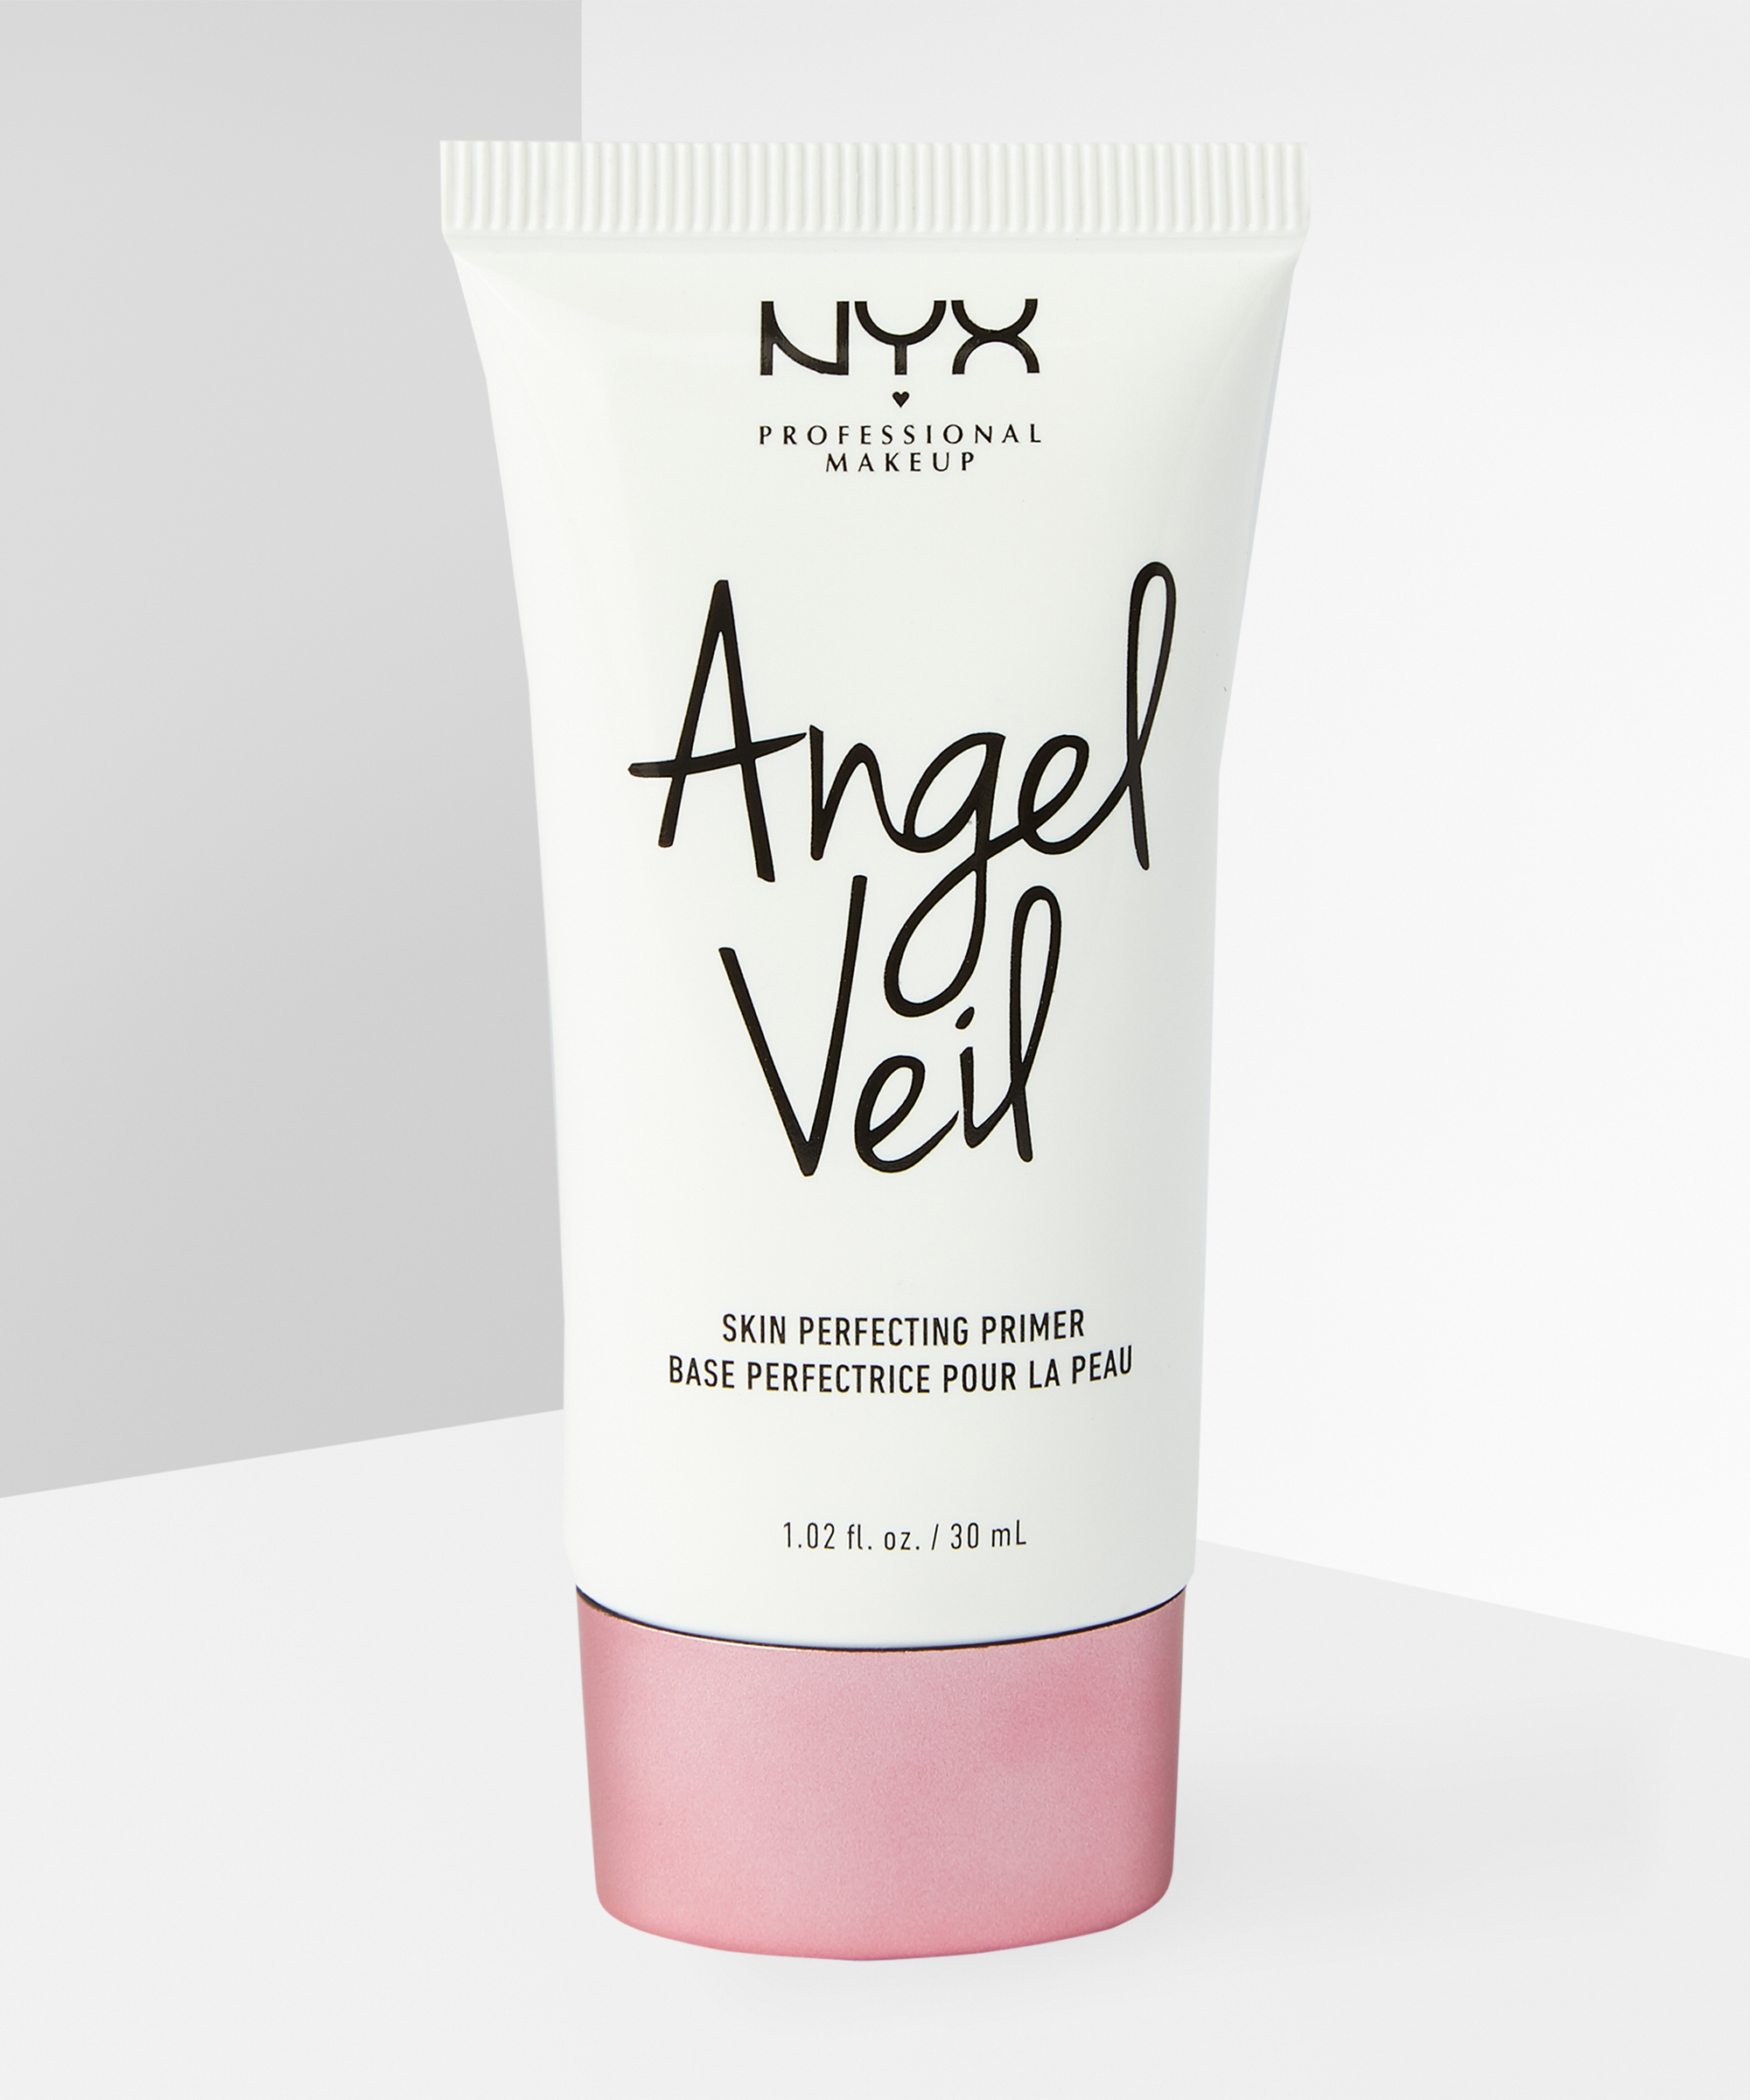 NYX Skin - Primer Perfecting Professional at Angel BAY Veil Makeup BEAUTY